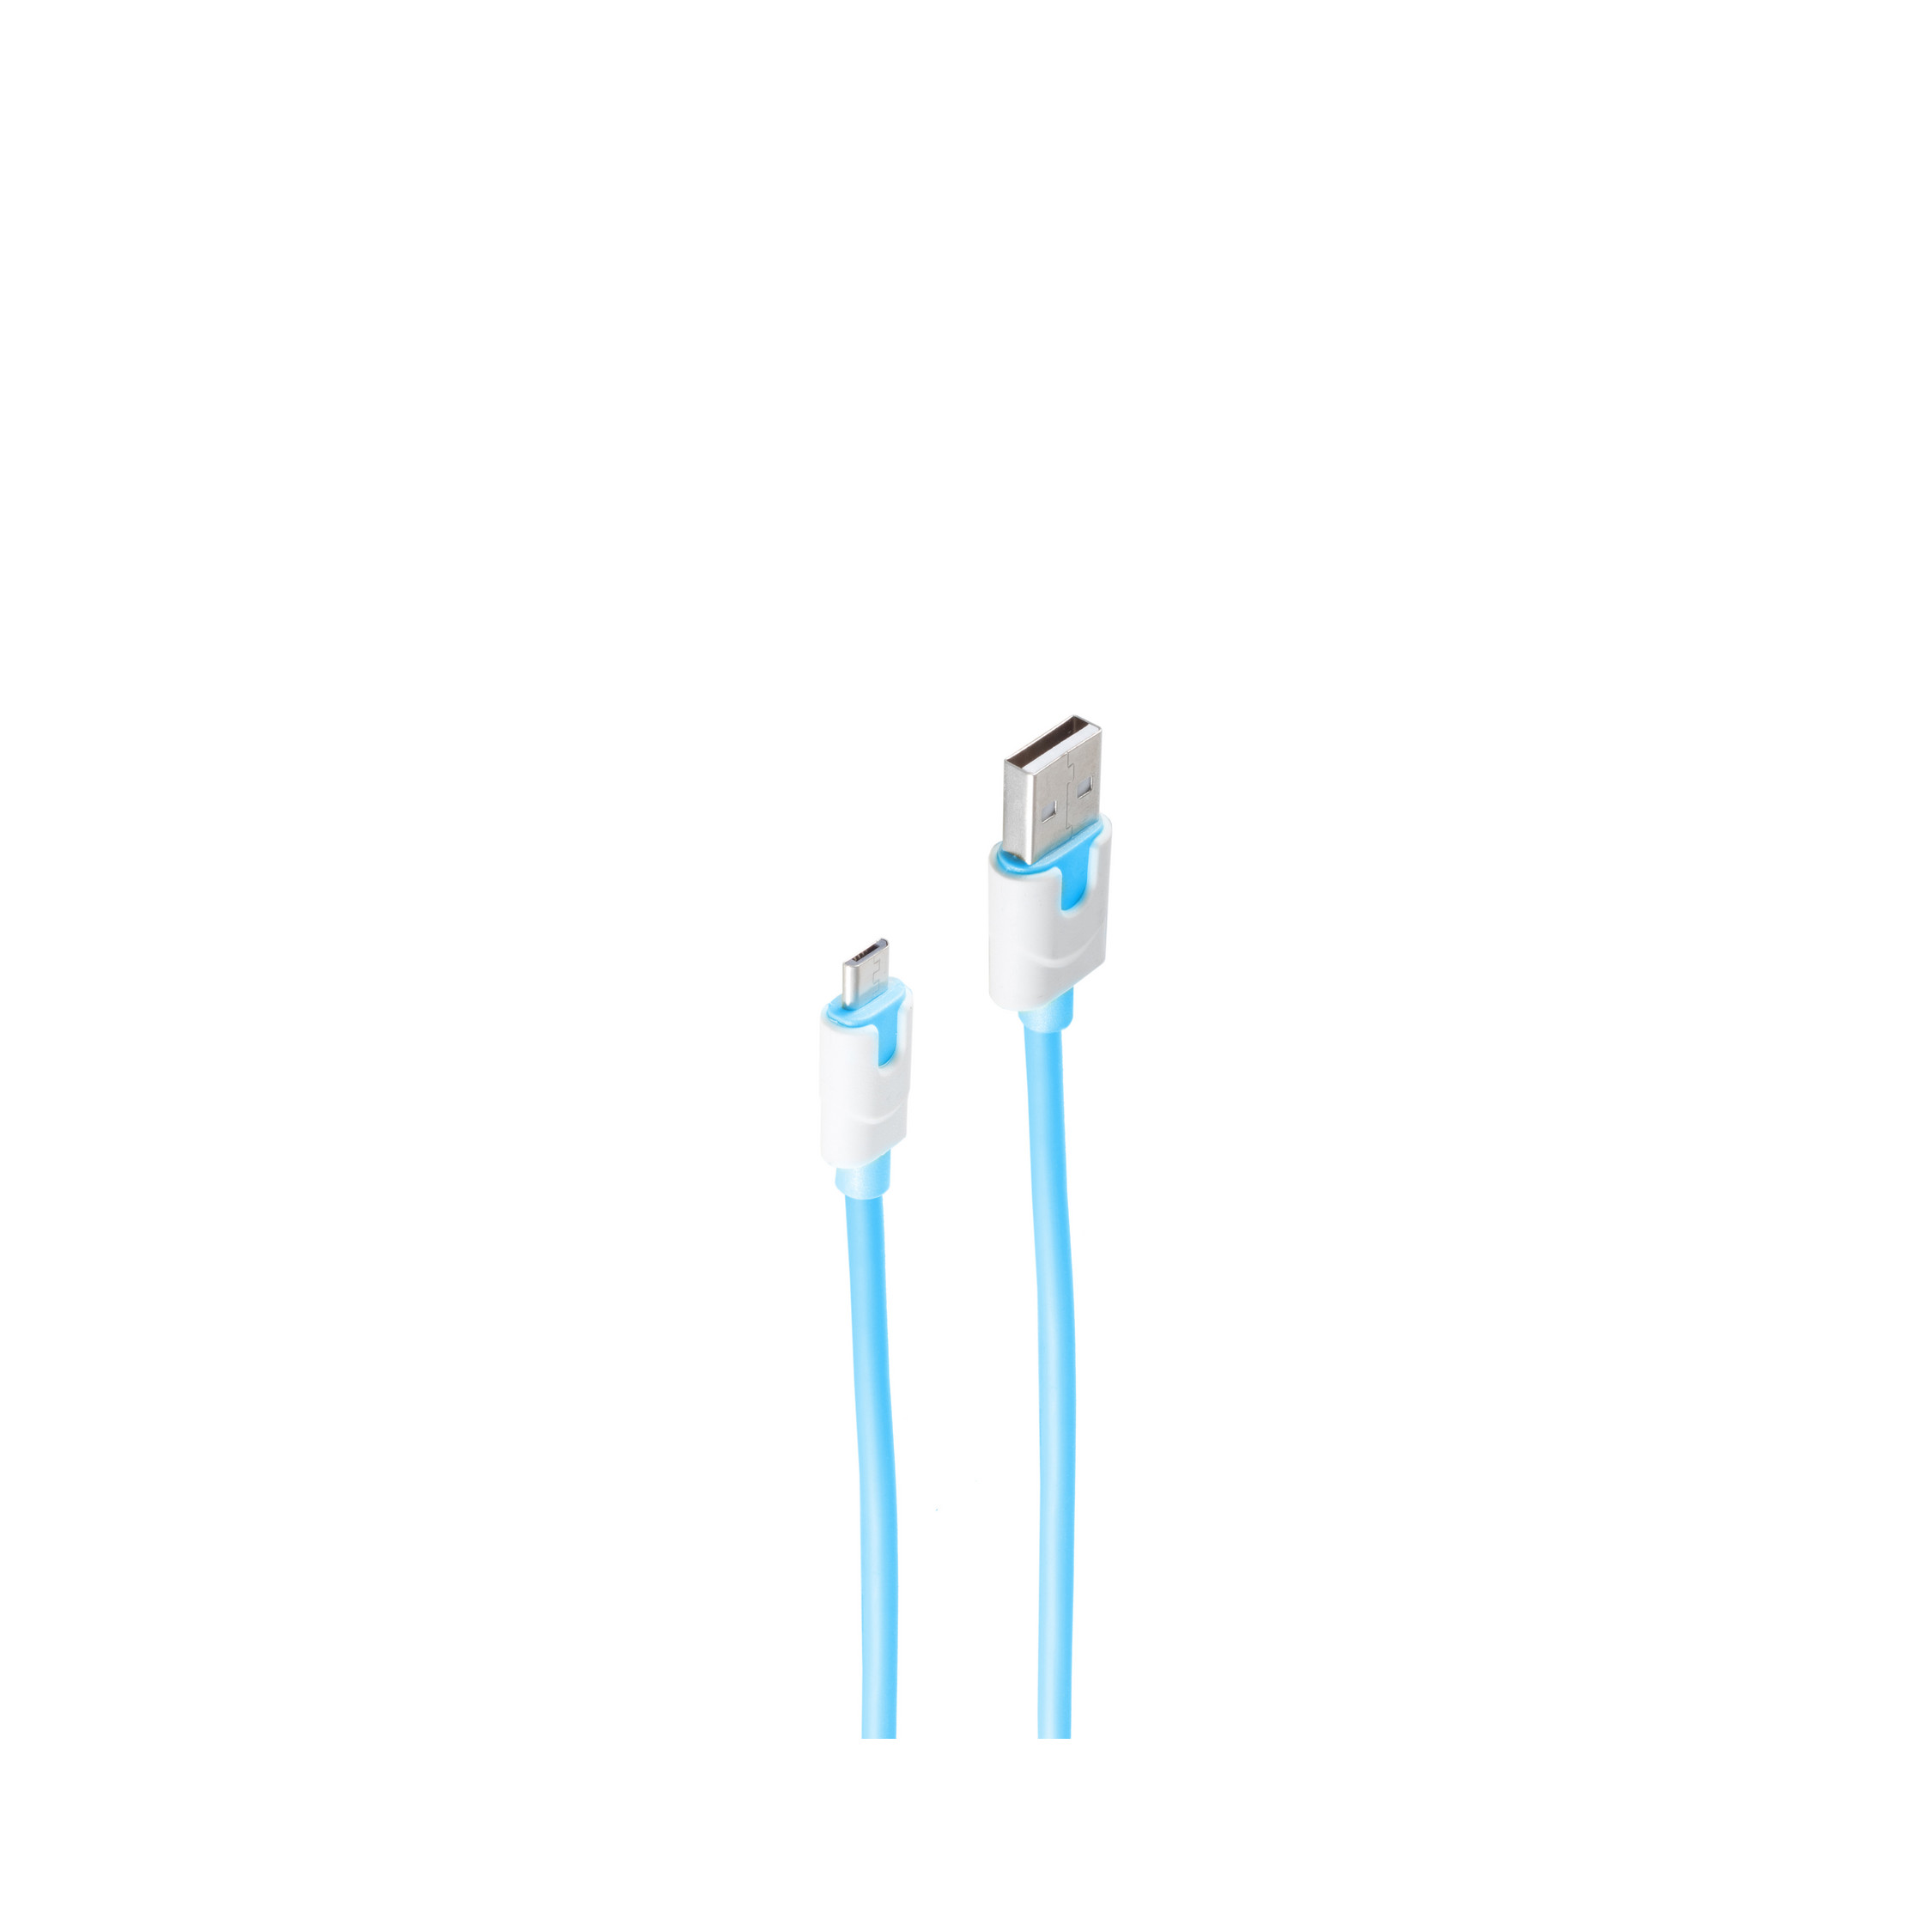 SHIVERPEAKS USB-Ladekabel A Stecker auf USB Ladekabel, blau Micro 0,3 blau, m, 0,3m, B